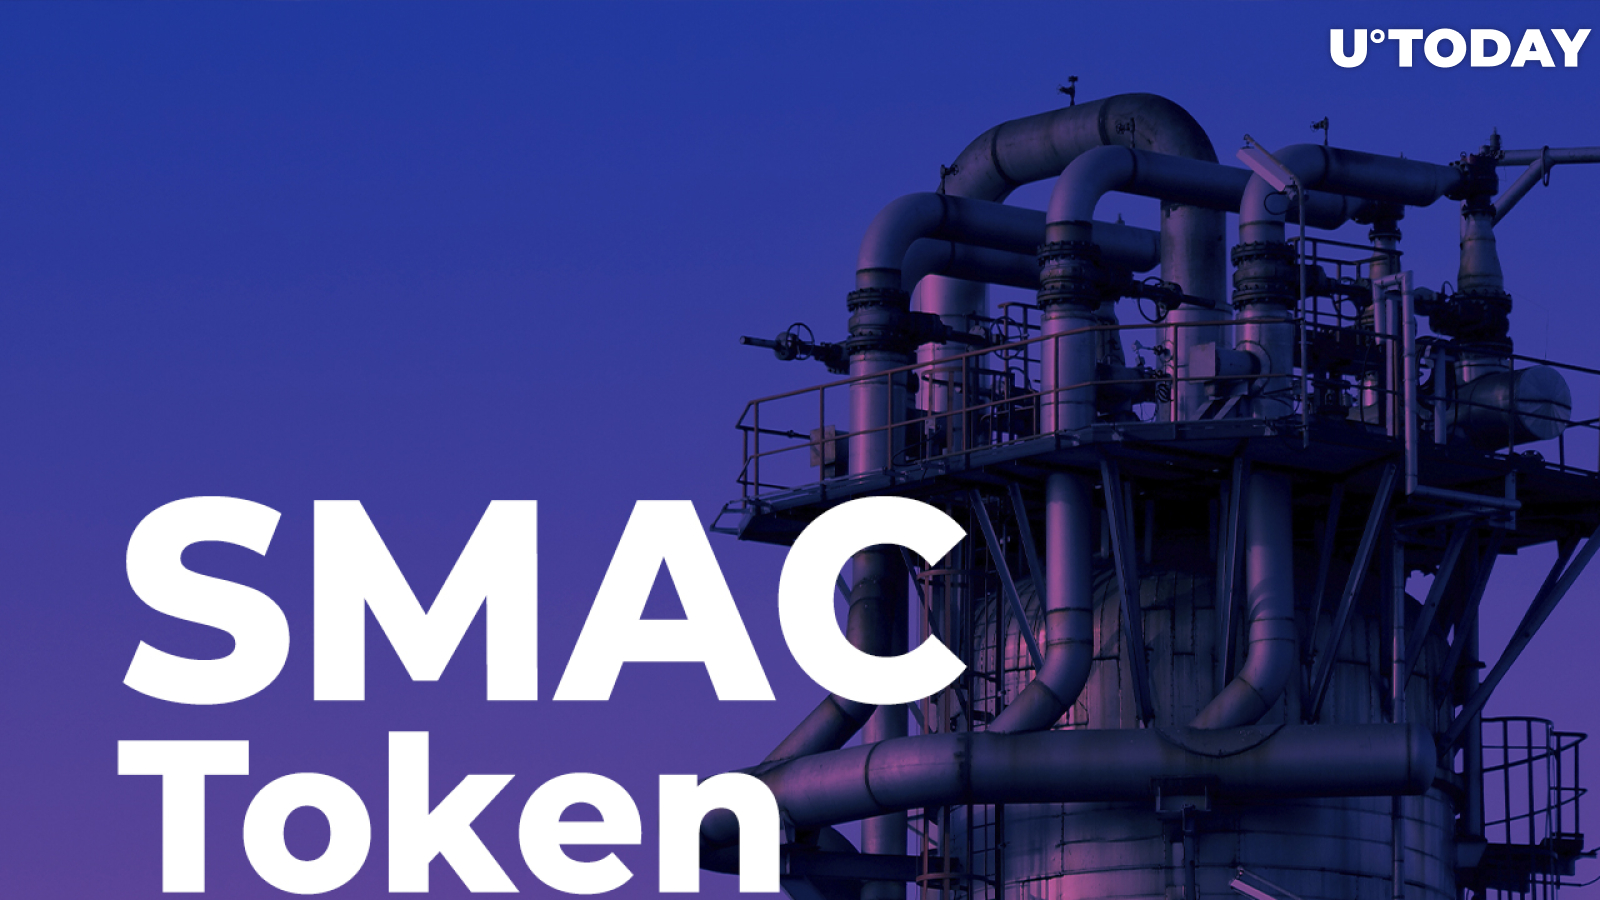 SmartChem (SMAC) Token Goes Live to Disrupt Chemical Industry: Details